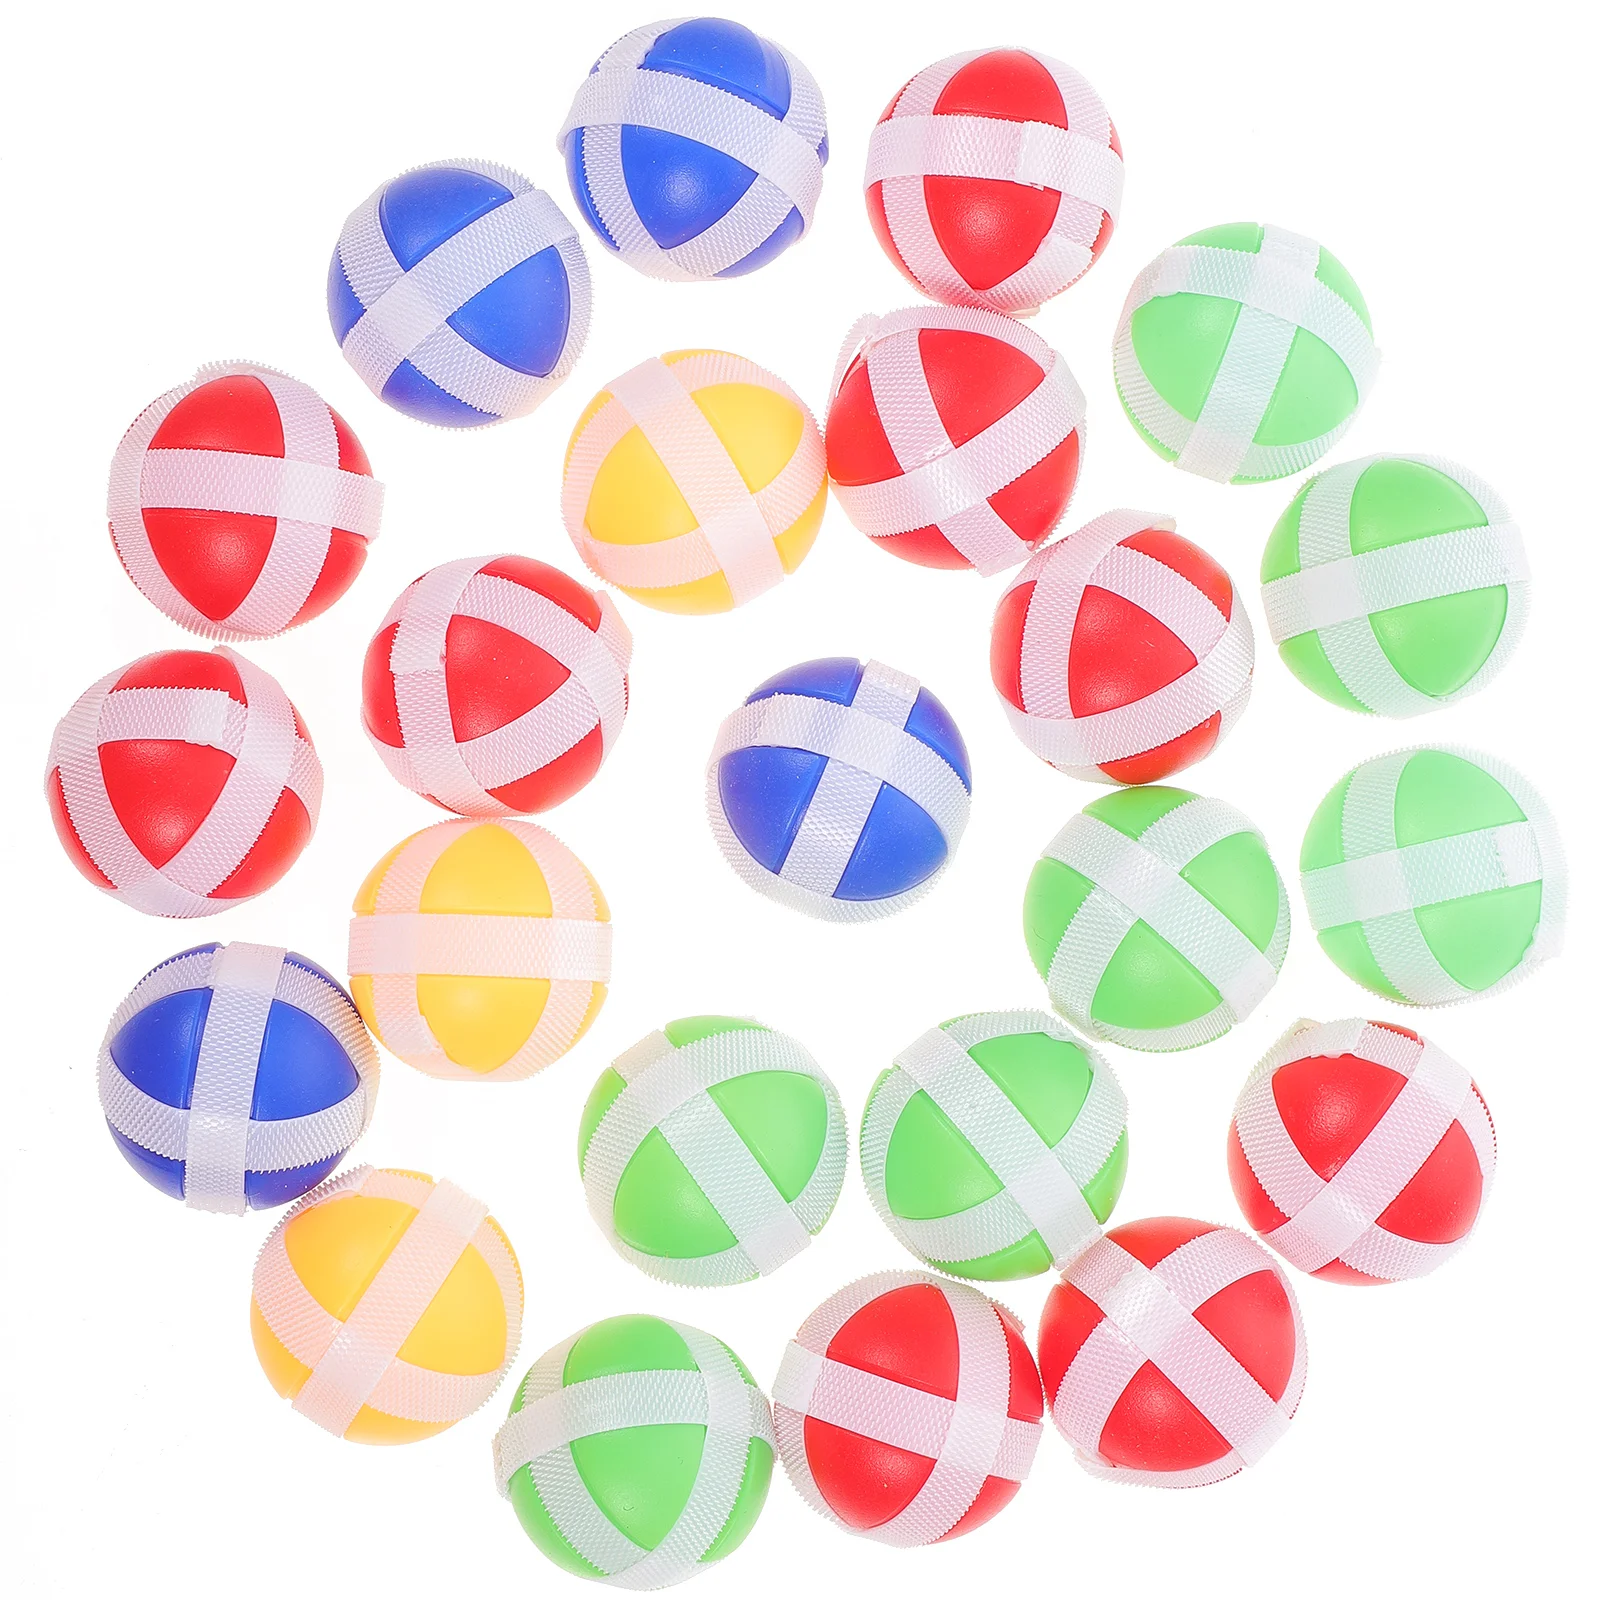 

24 Pcs Children’s Toys Sticky Ball Parenthood Interactive Funny Balls Darts Accessories Parent-child